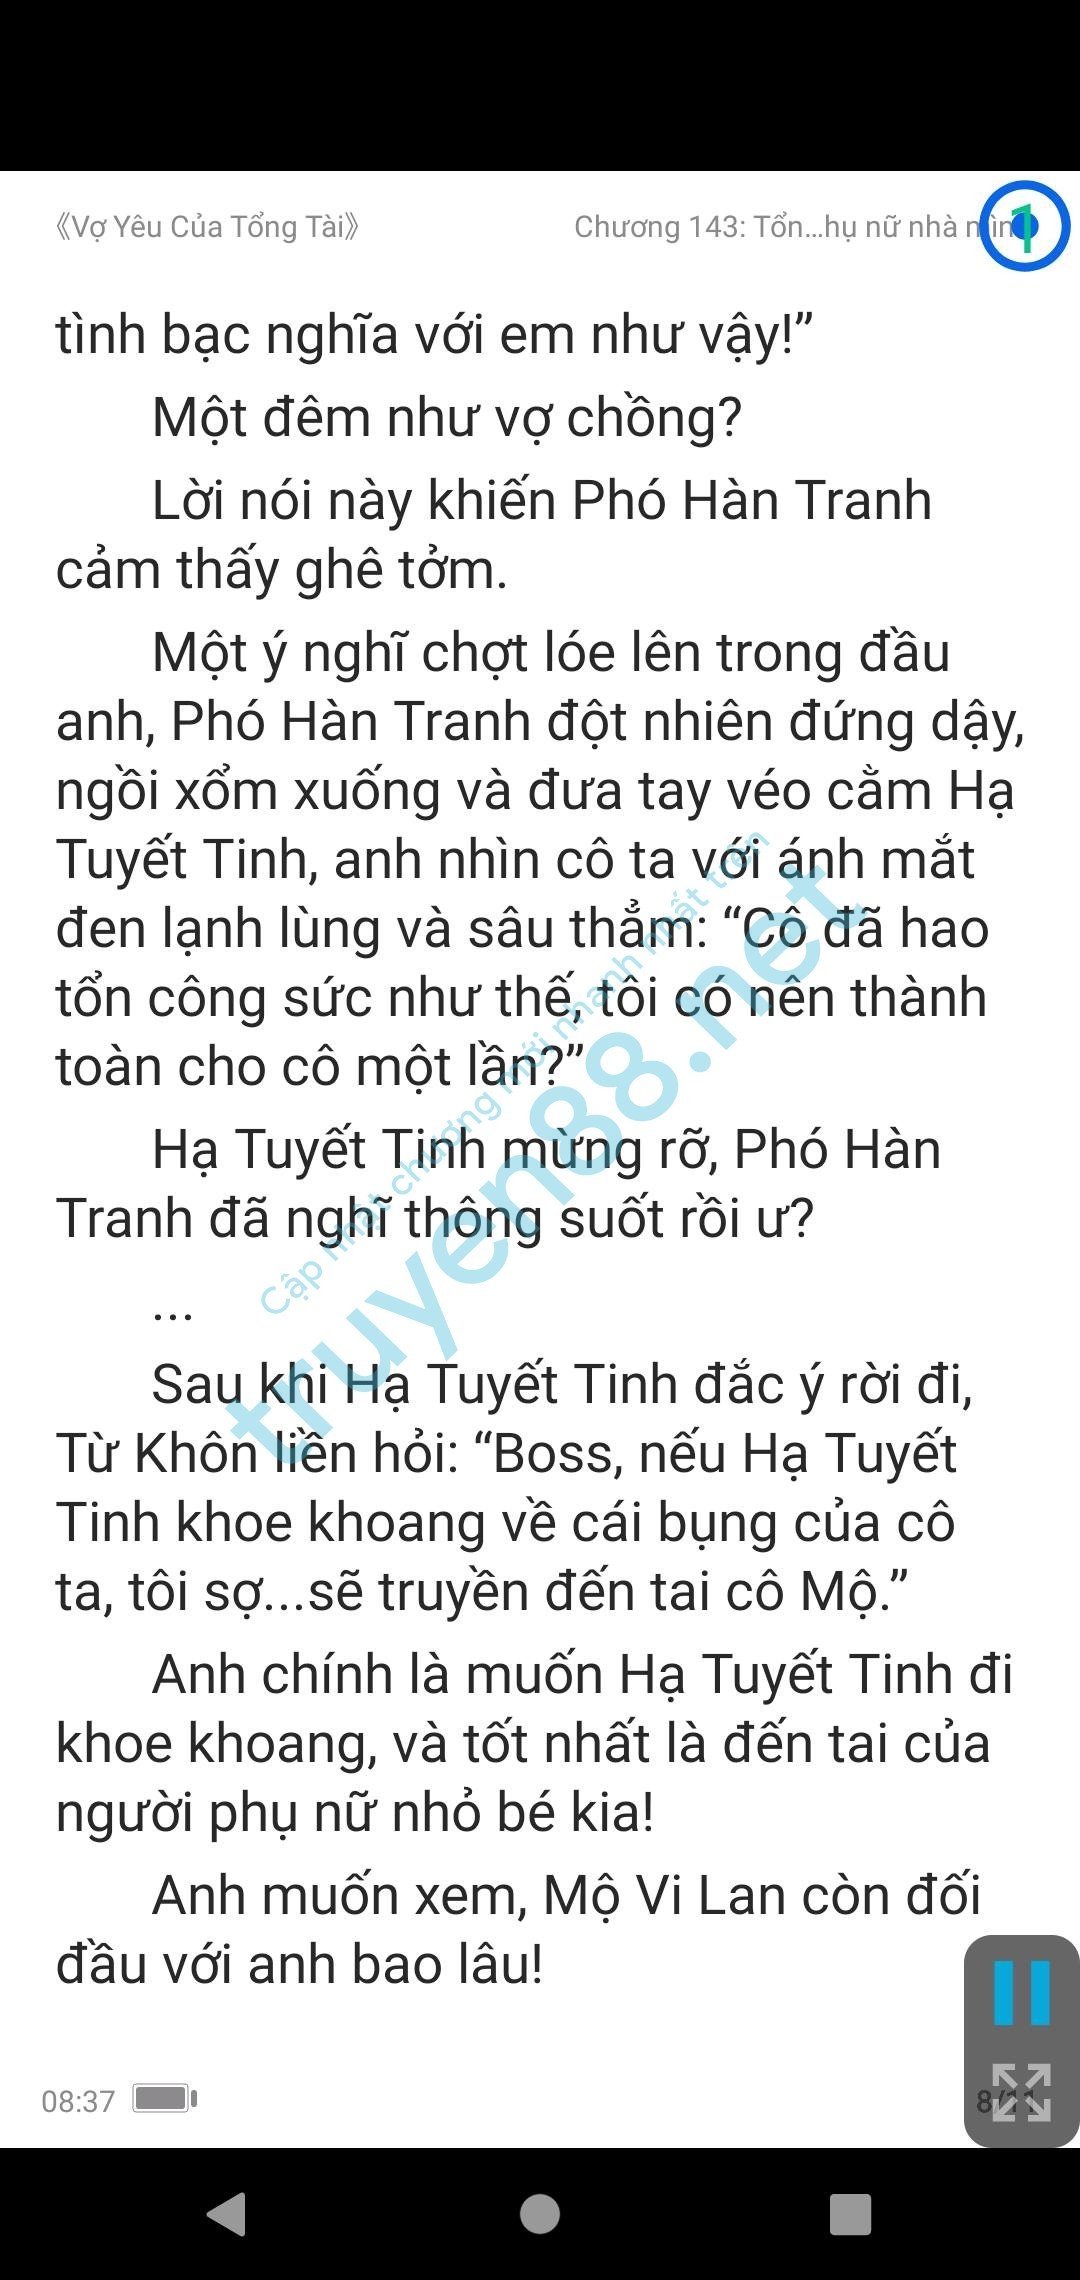 vo-yeu-cua-tong-tai-mo-vi-lan--pho-han-tranh-143-0